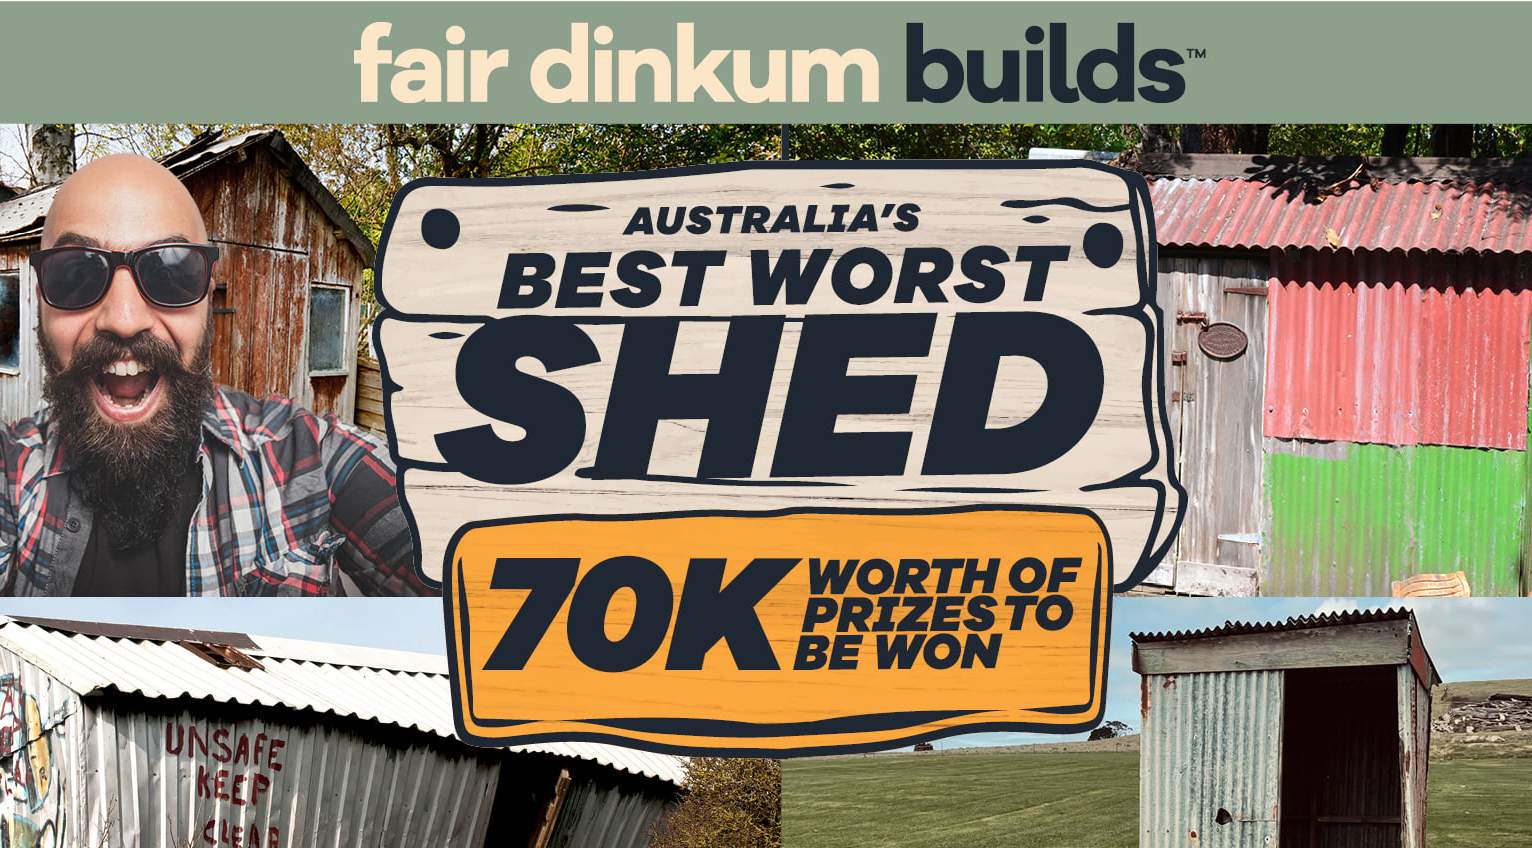 Australia's Best Worst Shed